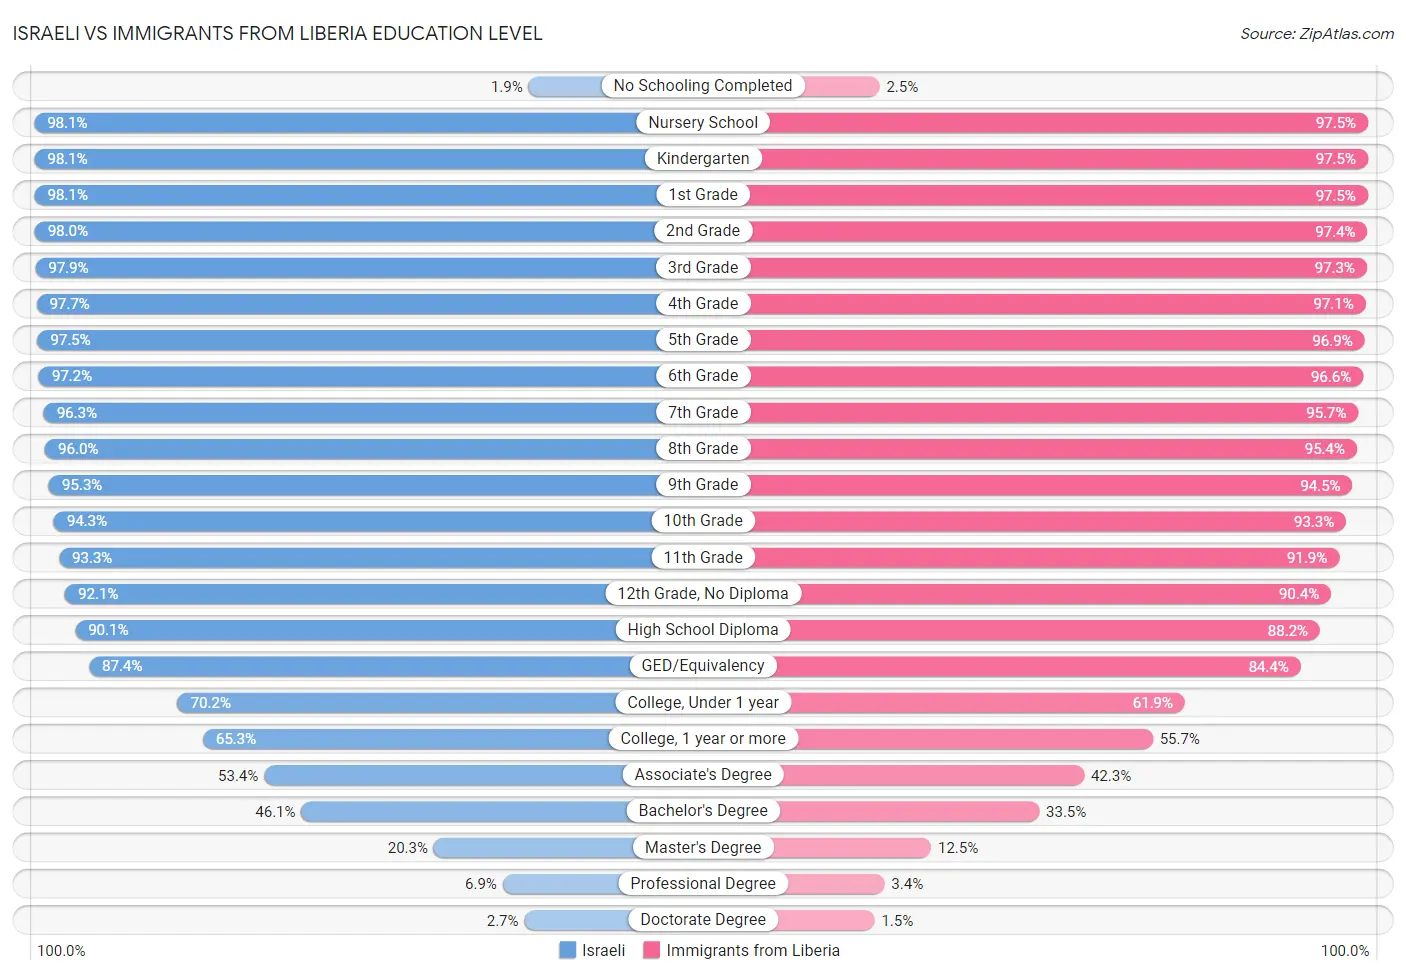 Israeli vs Immigrants from Liberia Education Level